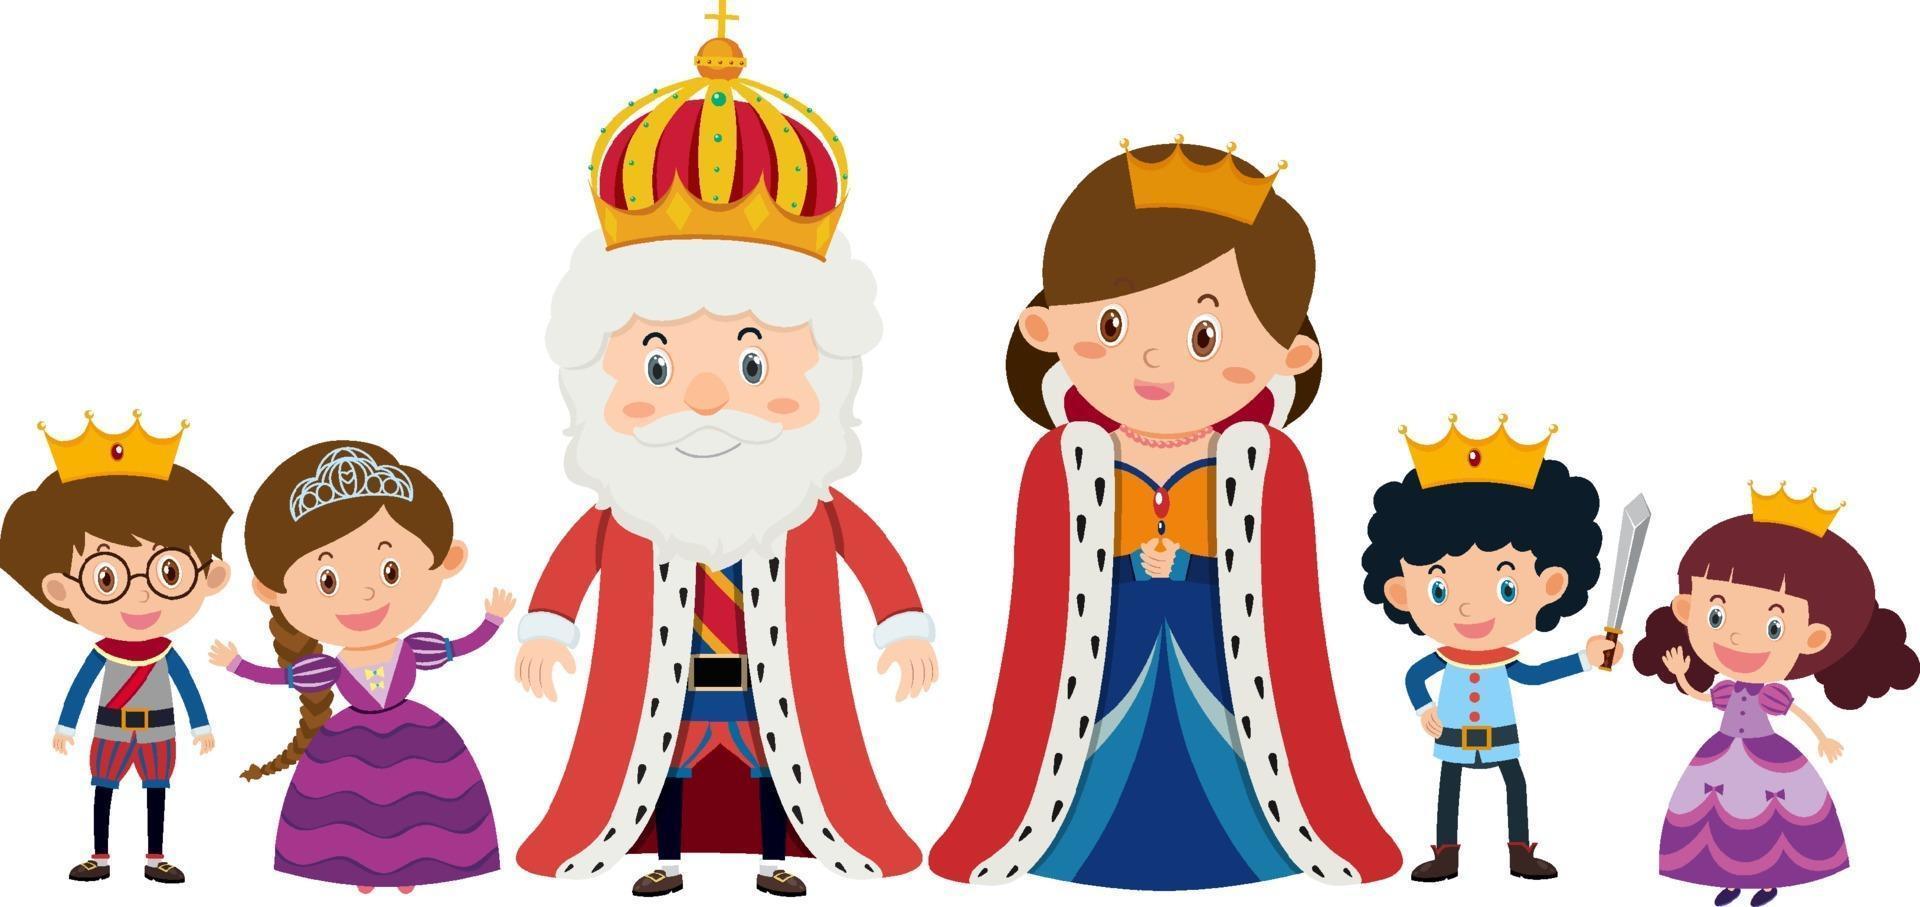 Royal family cartoon character vector